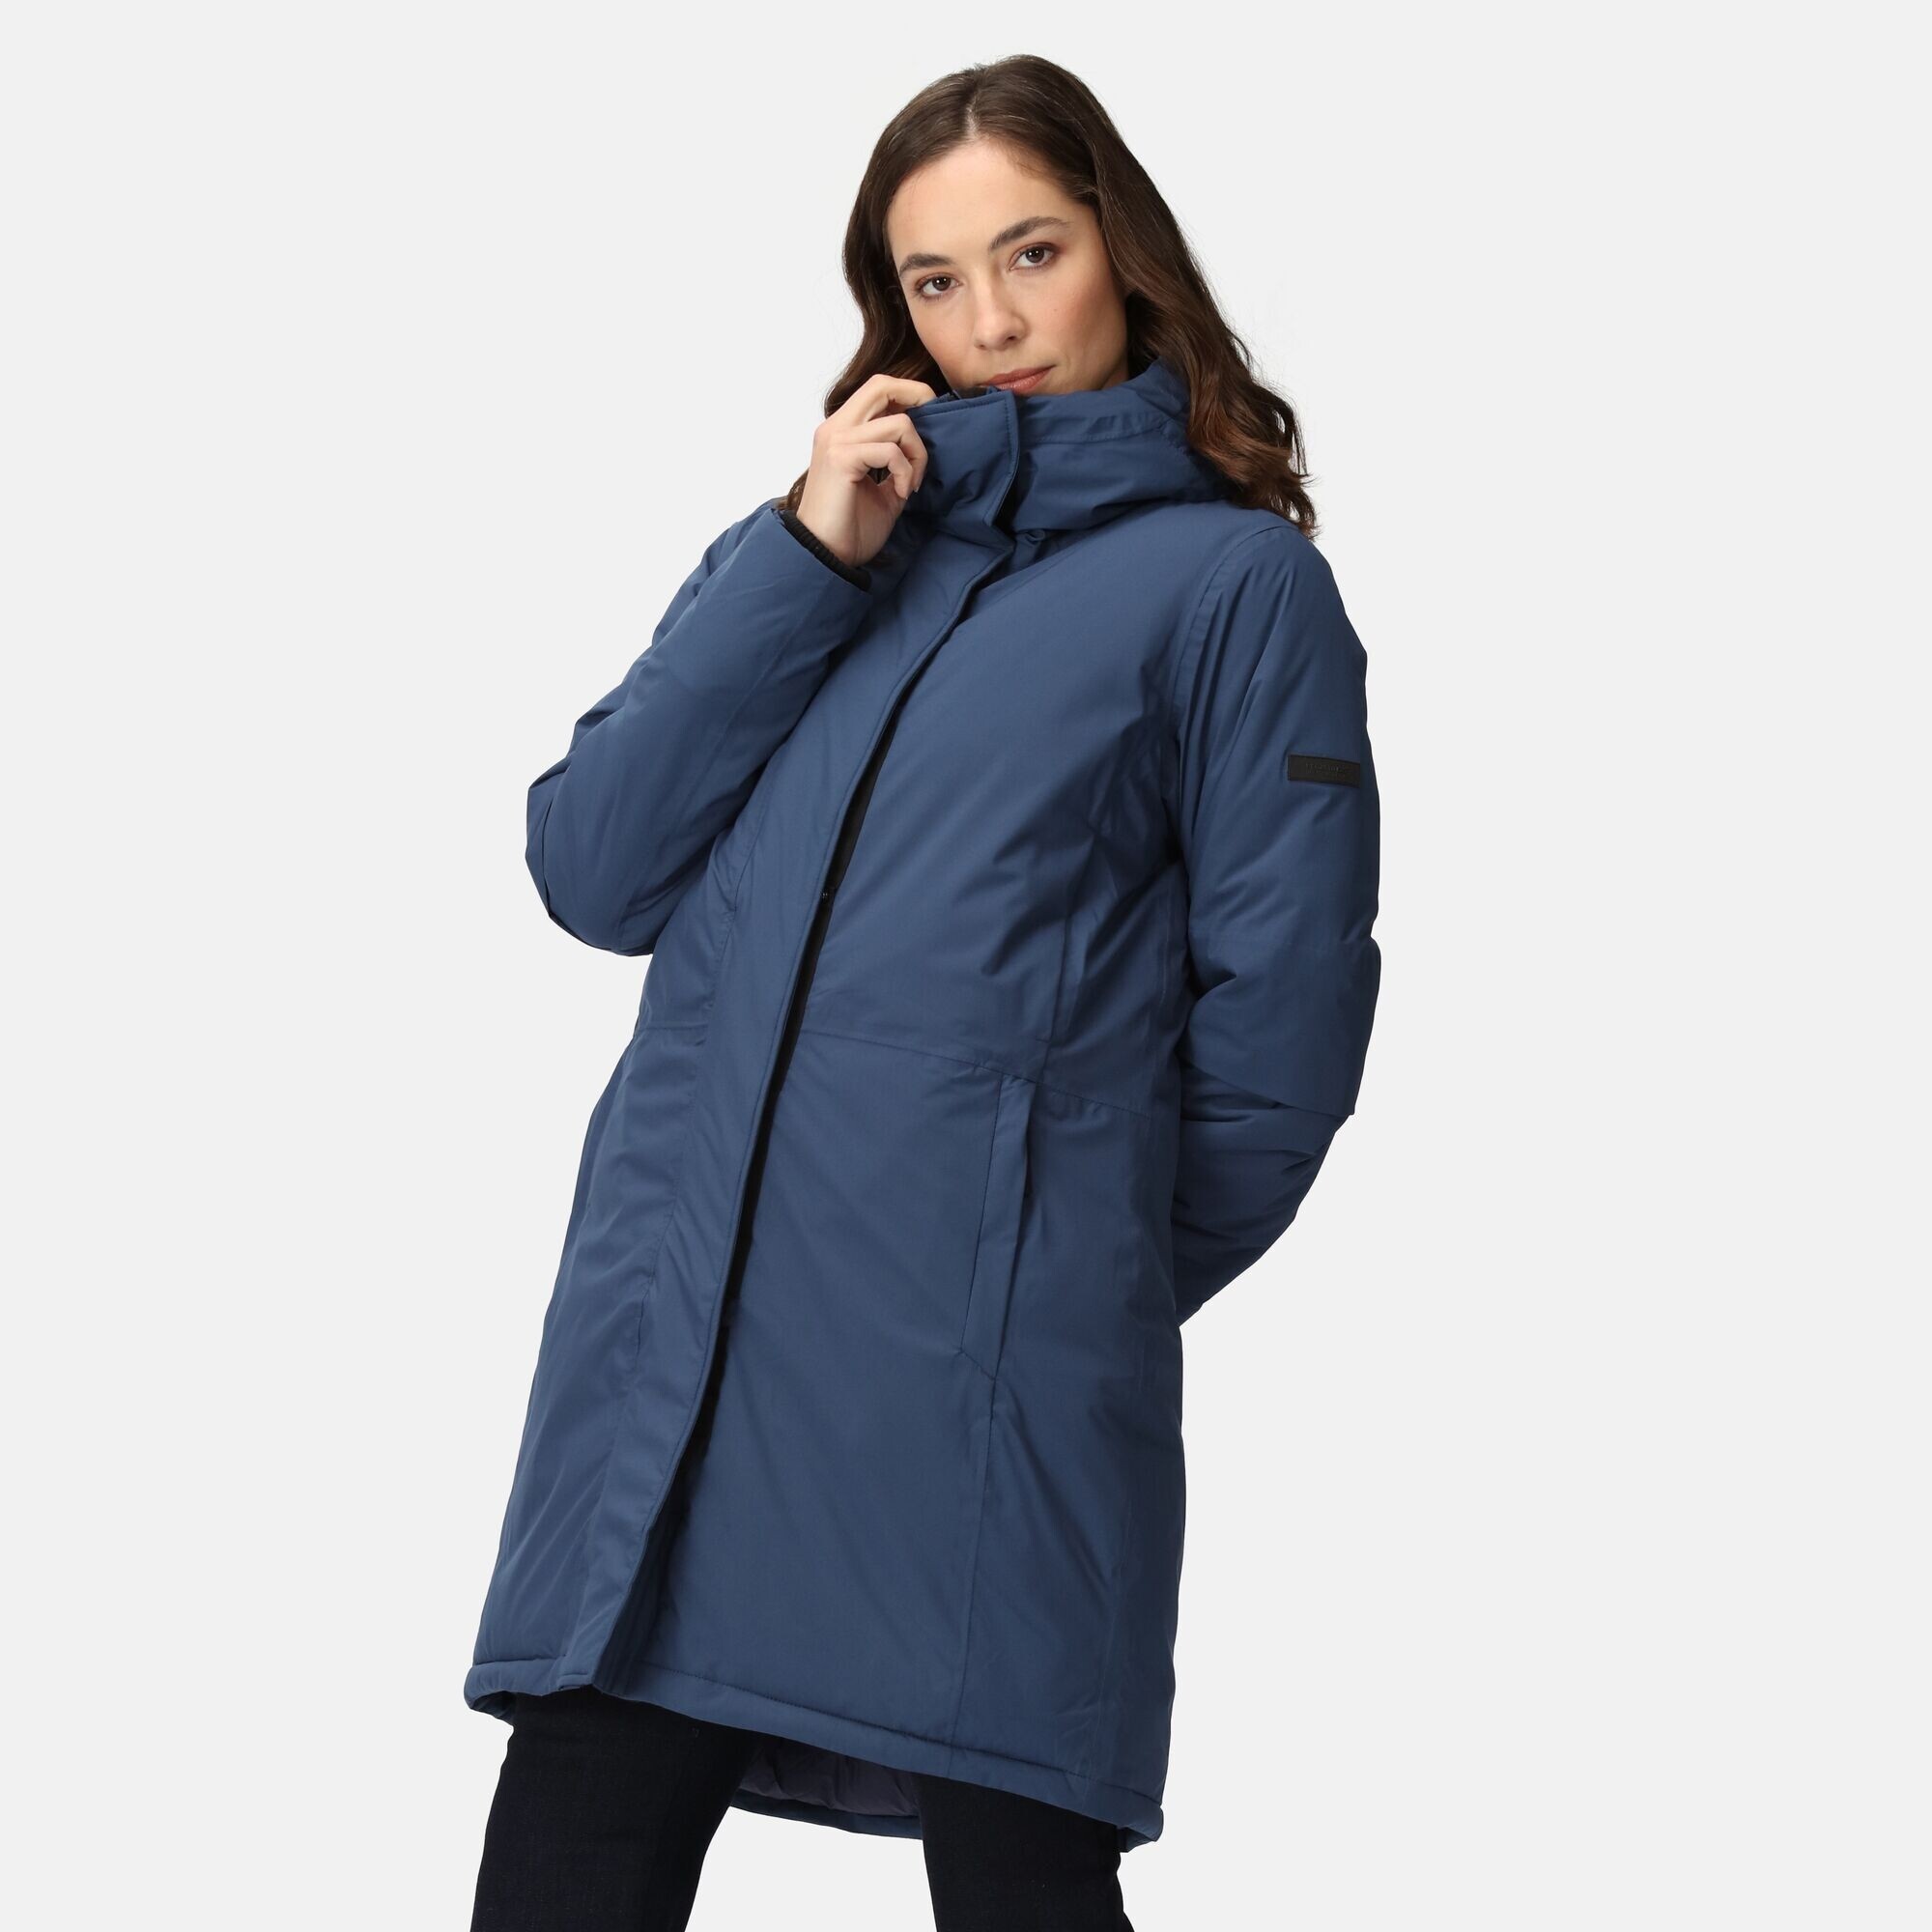 Dámský zimní kabát Yewbank III RWP384-VD4 modrý - Regatta 46